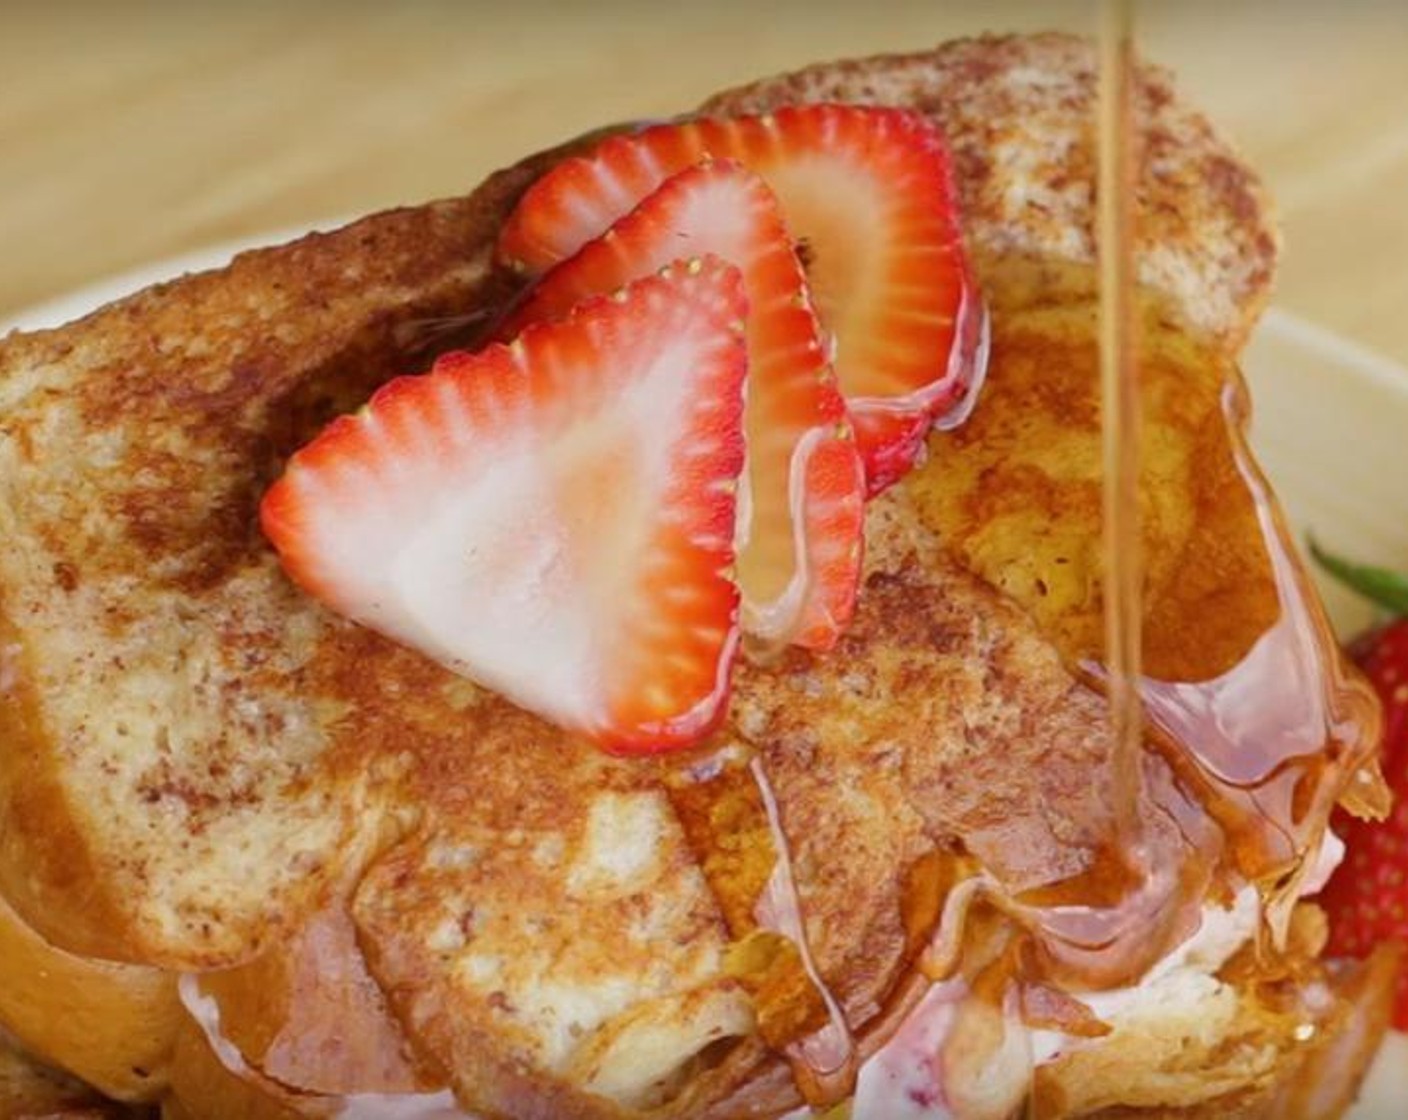 Strawberry Cheesecake Stuffed French Toast